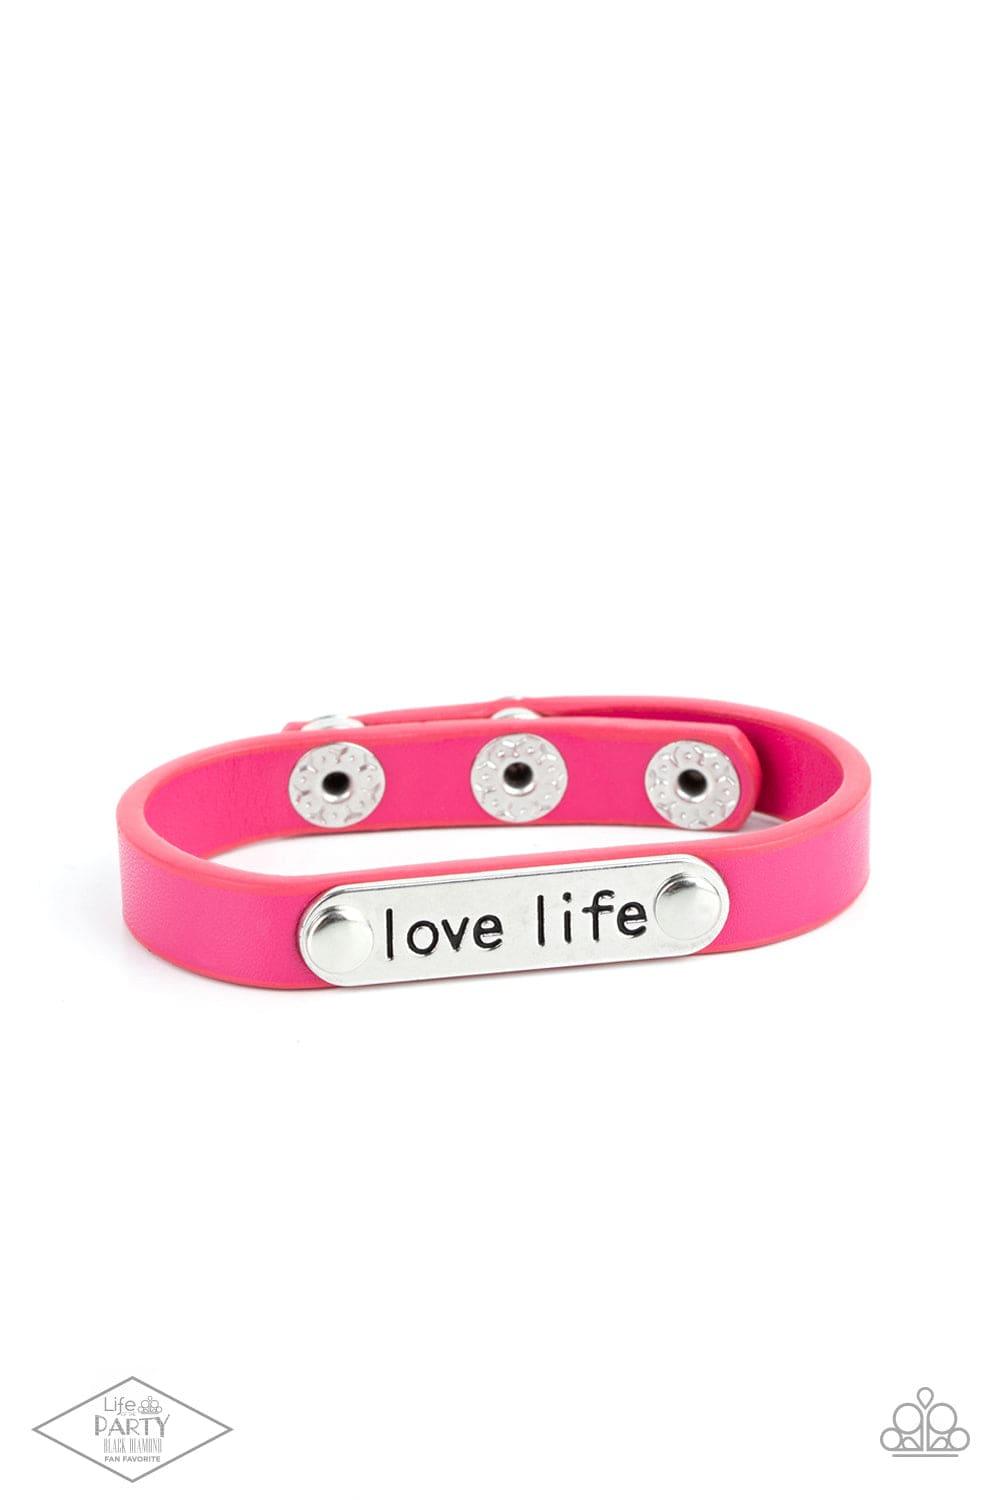 Paparazzi Accessories - Love Life - Pink Snap Bracelet - Bling by JessieK